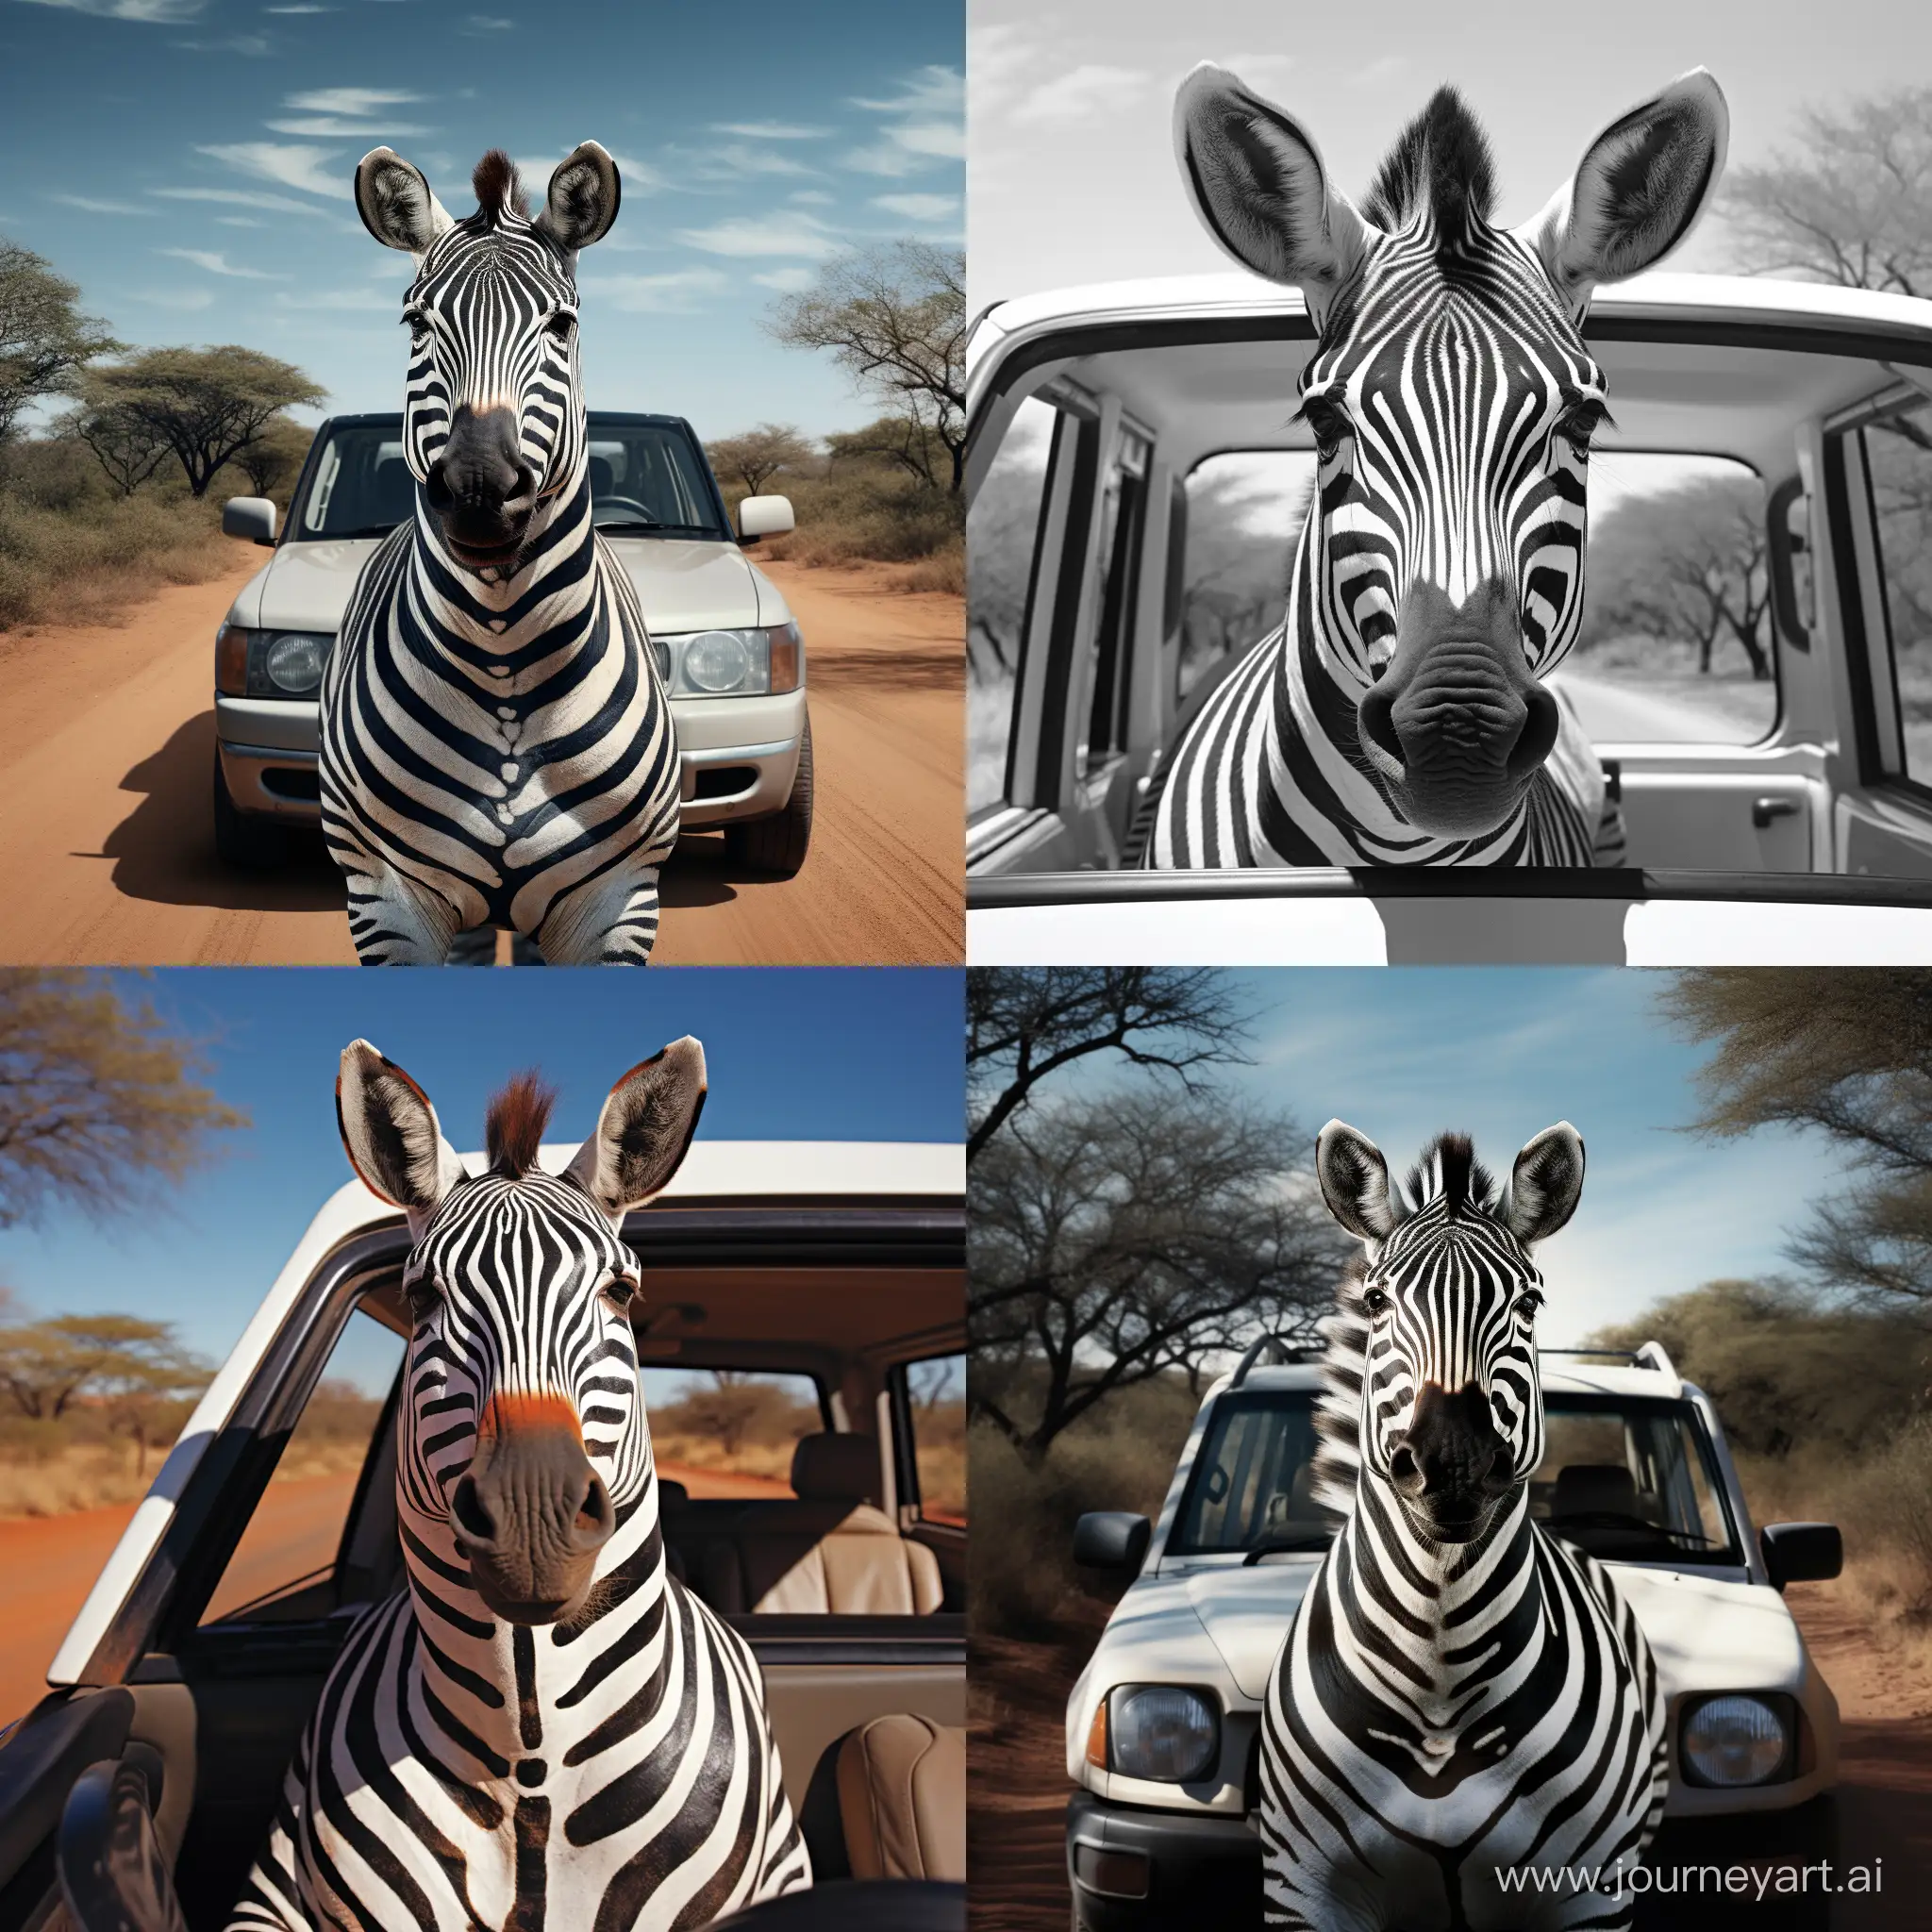 Zebra drives a car, front view